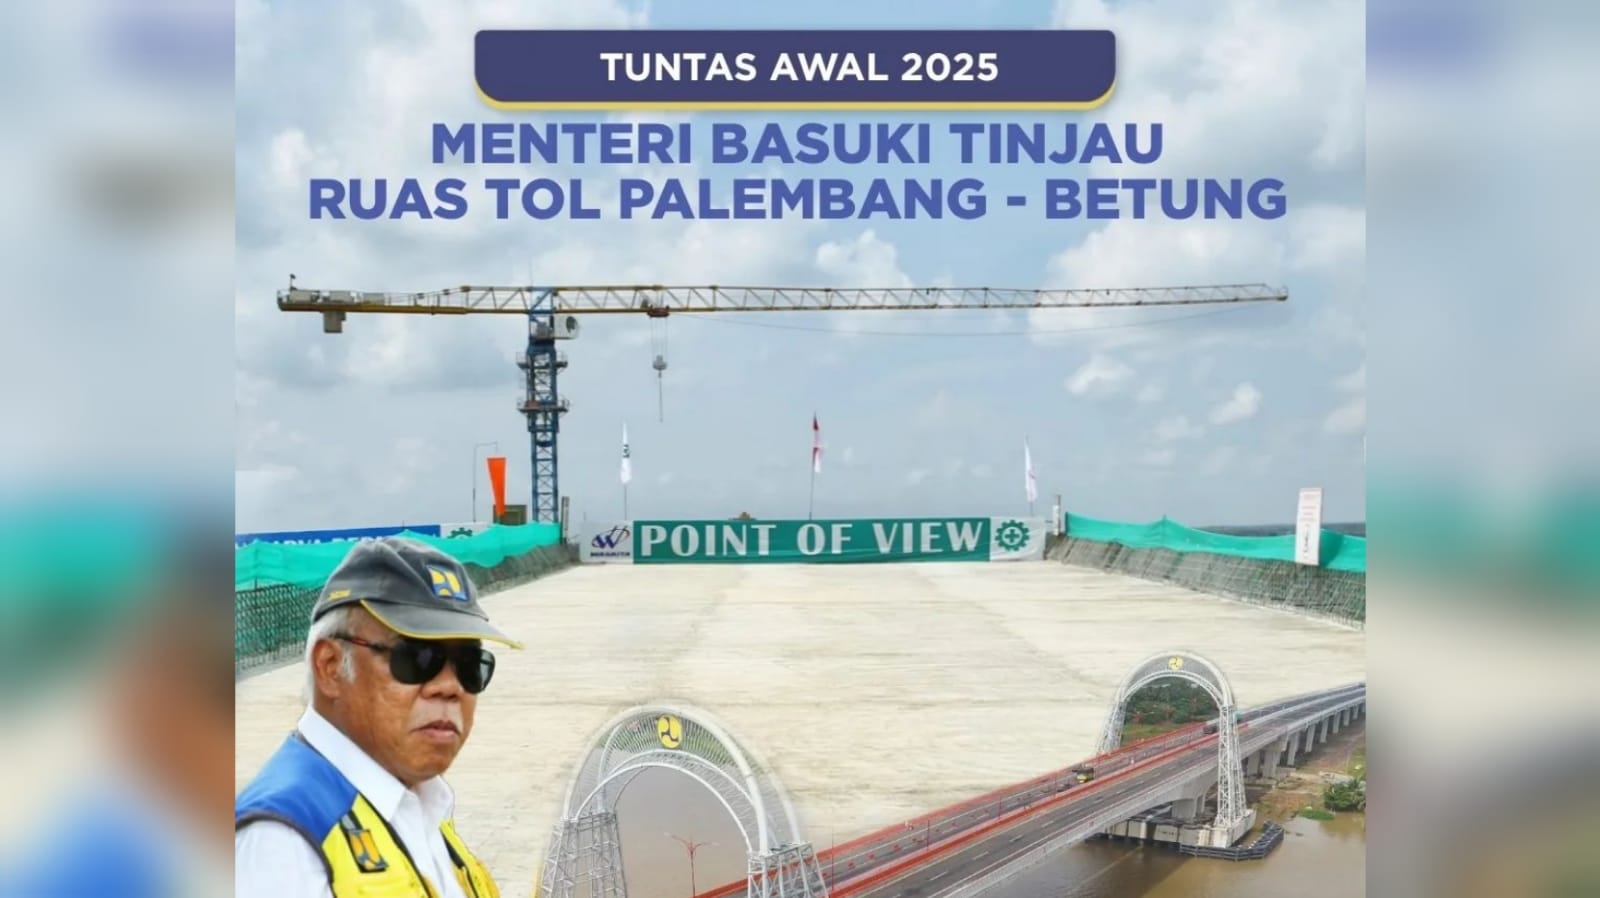 Goodbye Macet Lebaran! Awal 2025 Tol Palembang Ini Segera Beroperasi Mudik ke Provinsi Tetangga Cuma 3,5 Jam